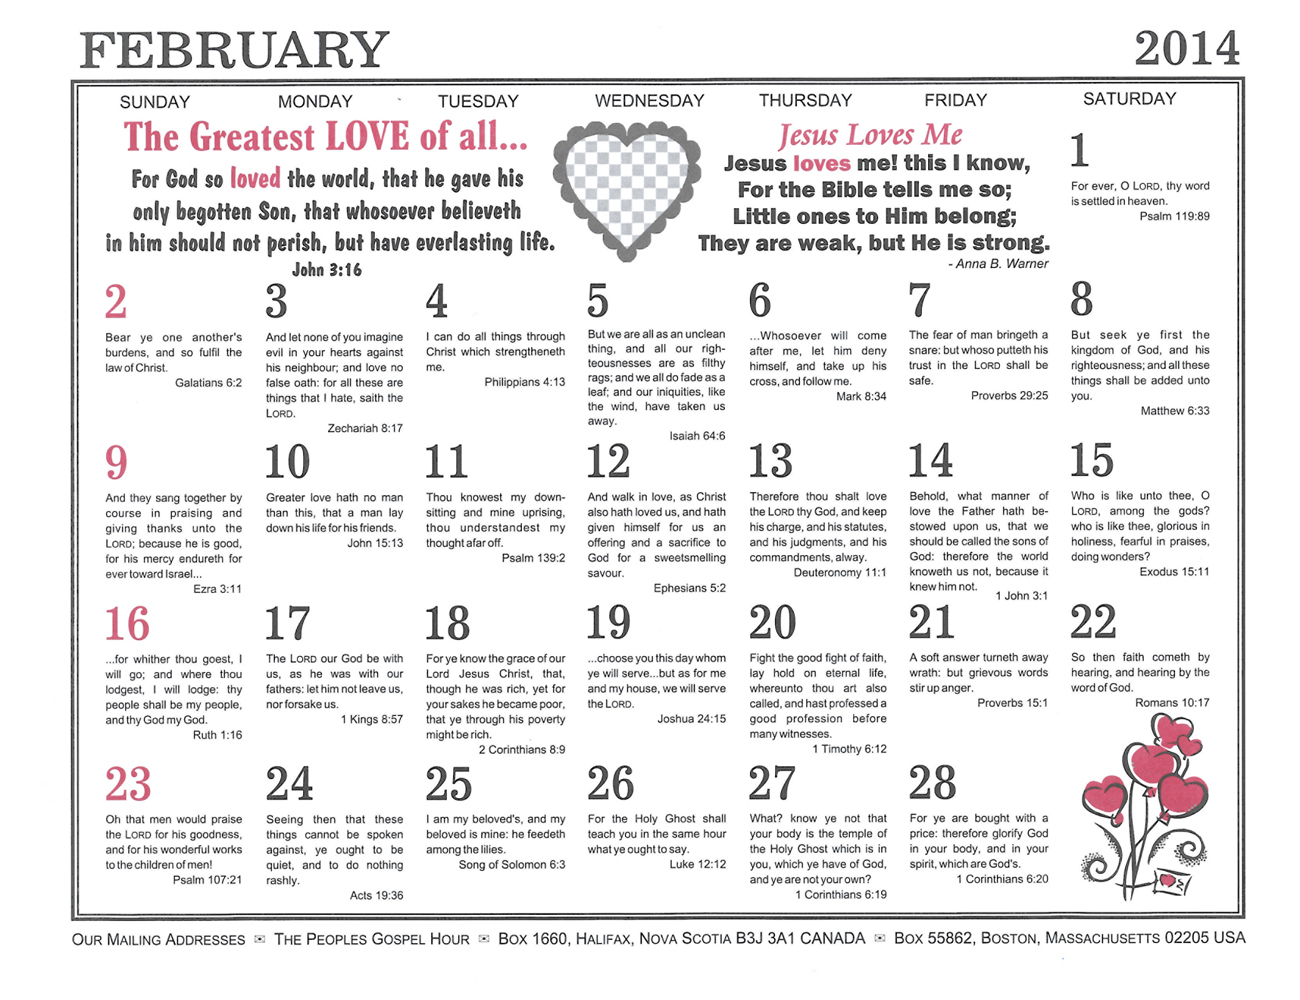 February: 2014 The Peoples Gospel Hour Calendar